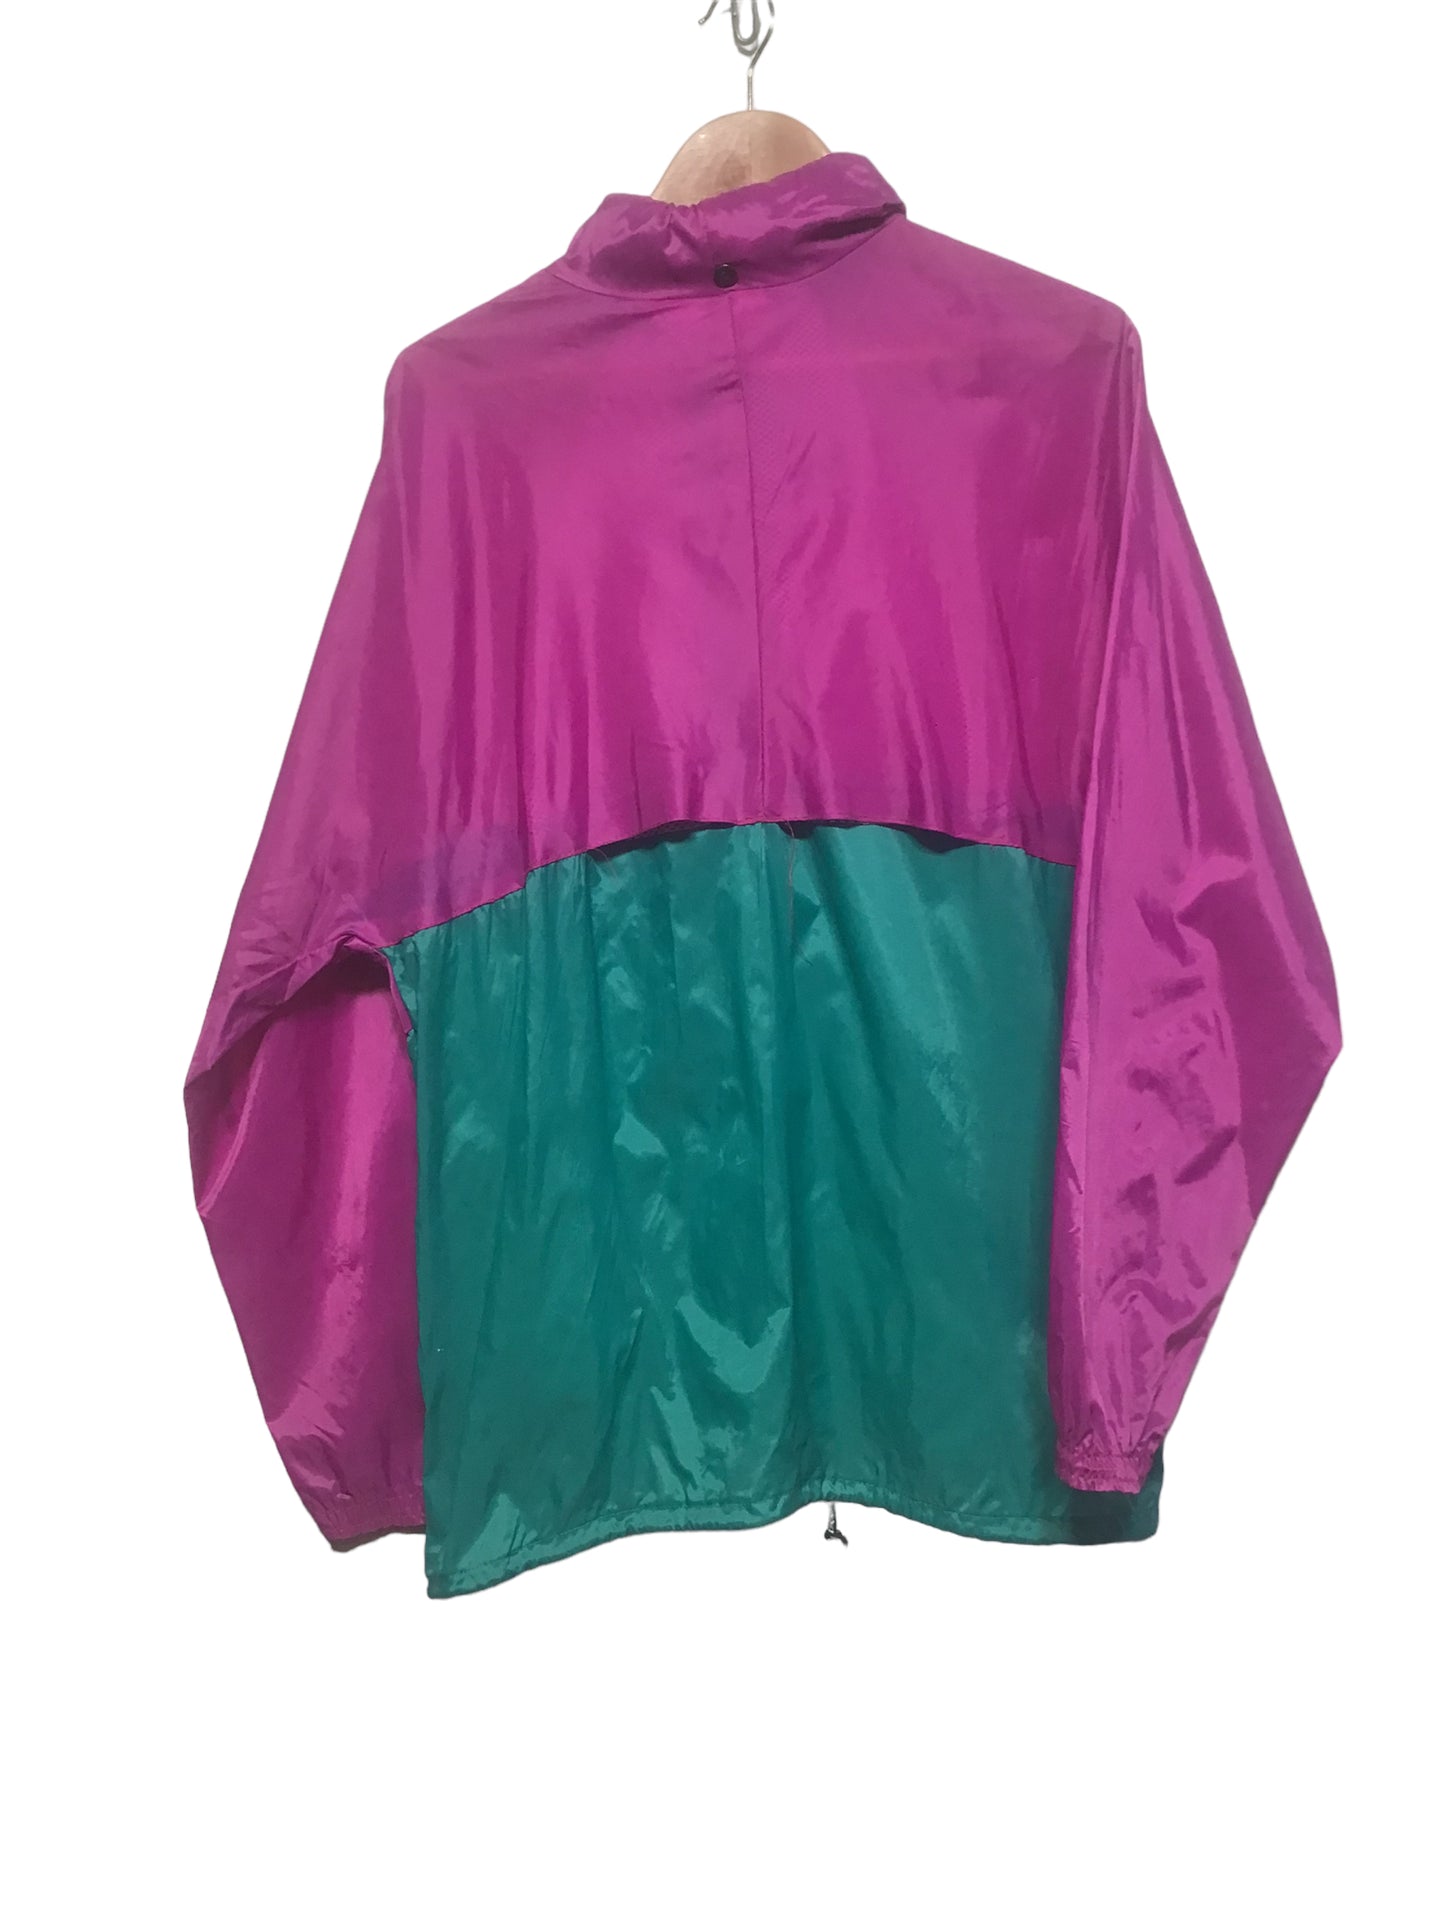 Avventura Rain Jacket with Hood and Zip Pockets (Size L)